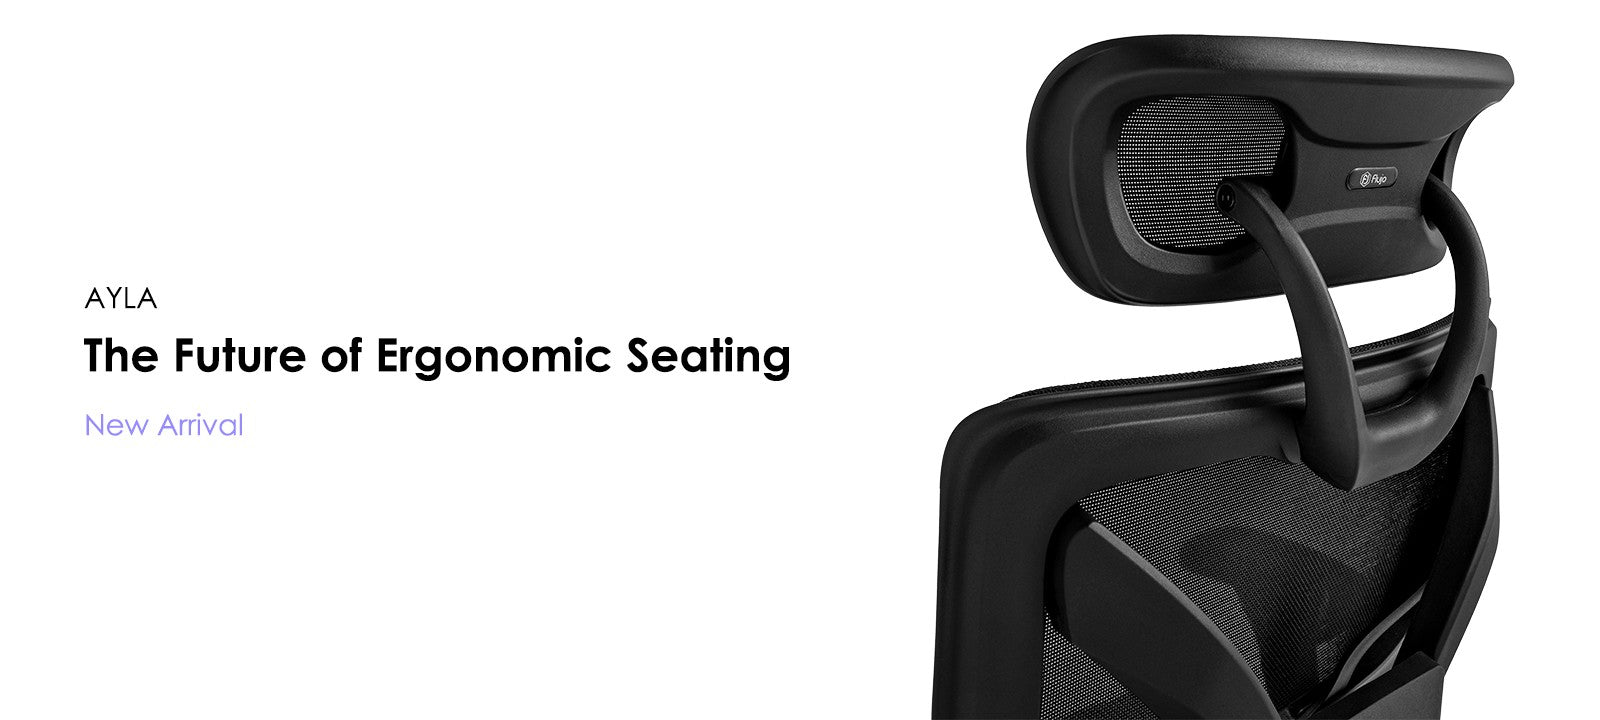 Ayla ergonomic chair showcasing mesh backrest and lumbar support with 'The Future of Ergonomic Seating' slogan.